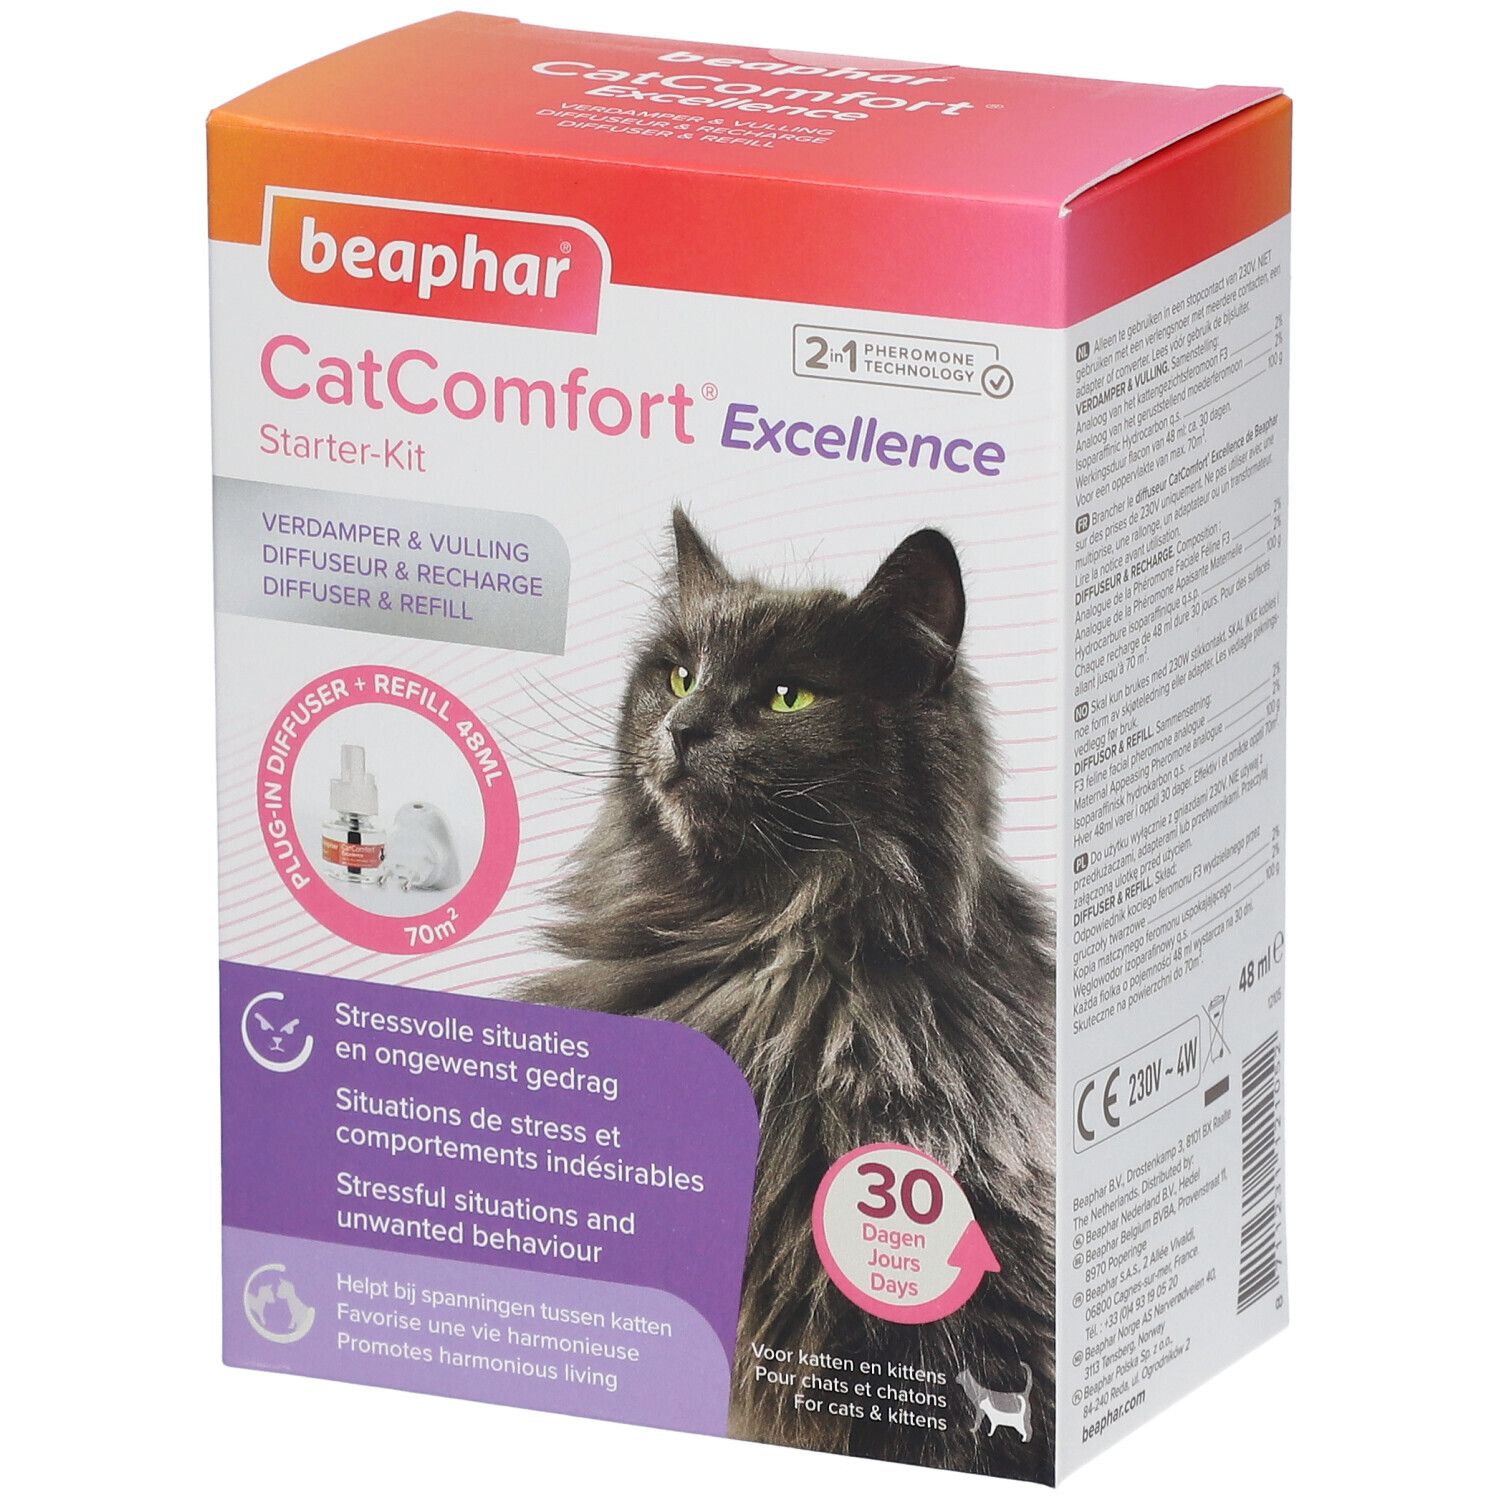 beaphar® CatComfort® Excellence Diffuseur & Recharge